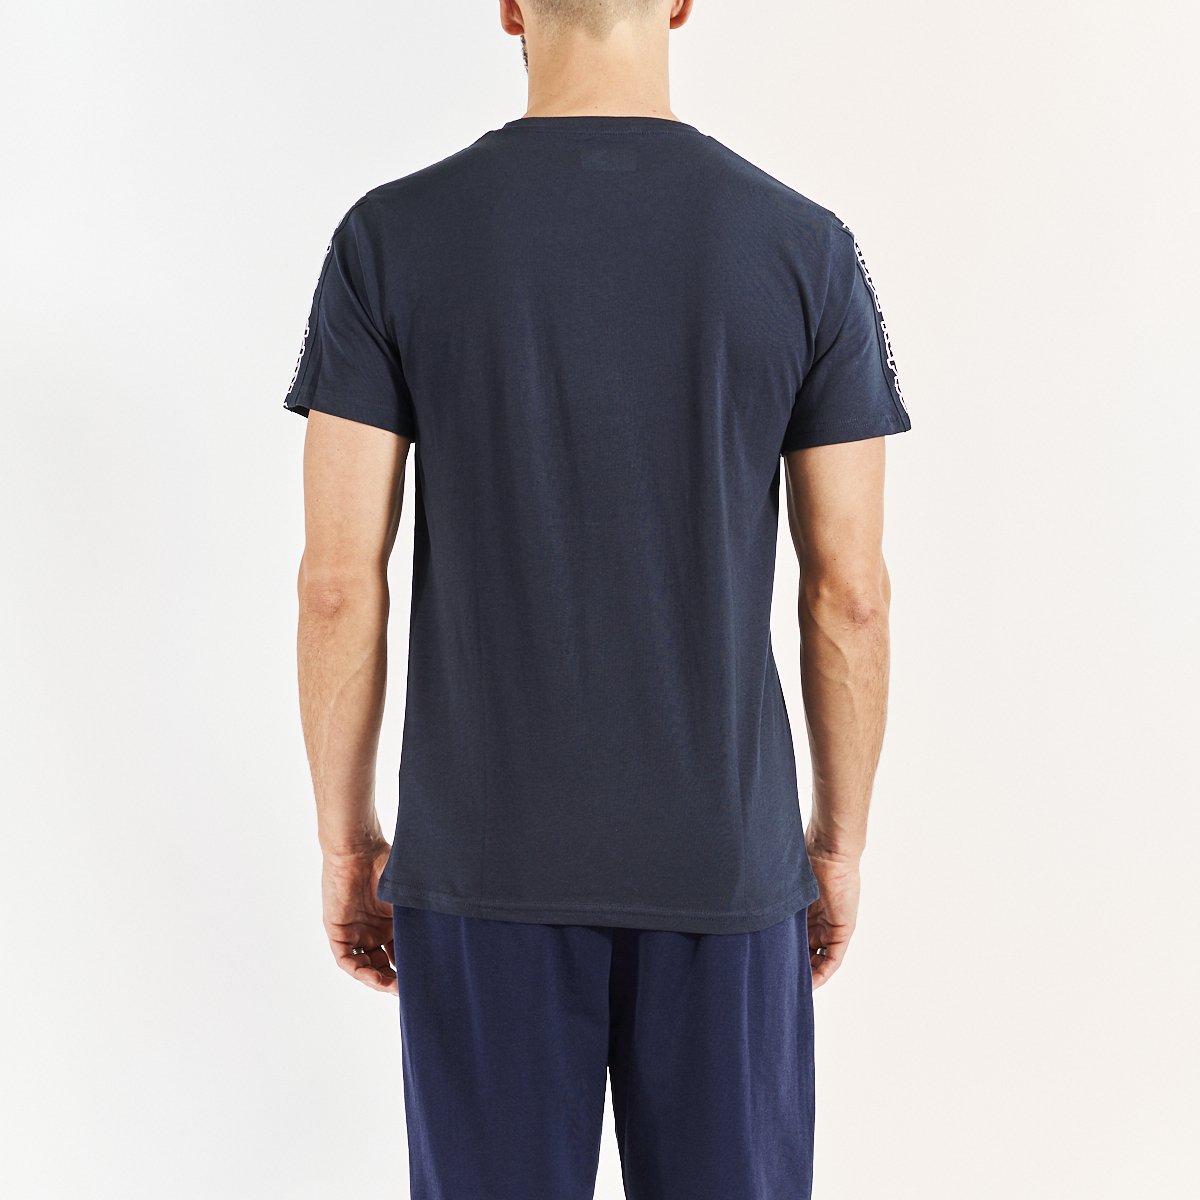 Camiseta Itap hombre azul - Imagen 3